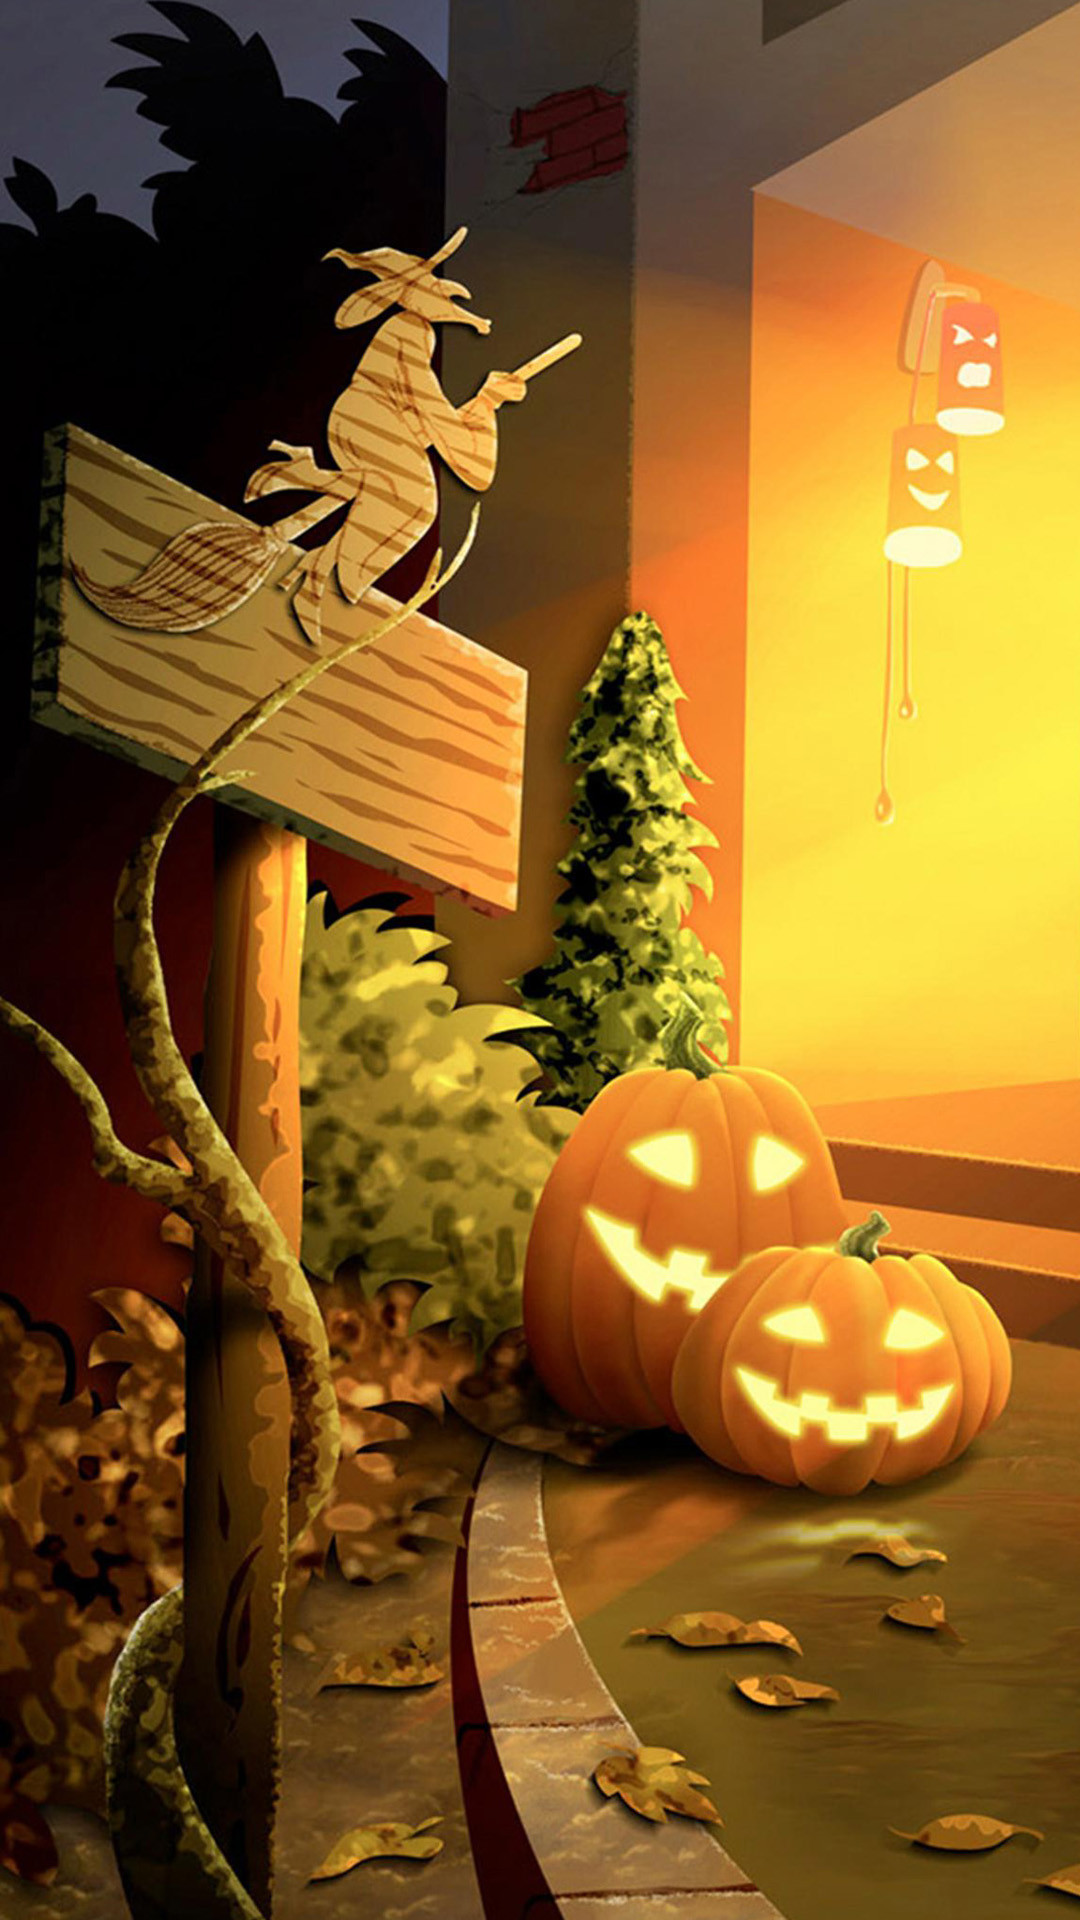 1080x1920 Halloween iphone wallpapers backgrounds